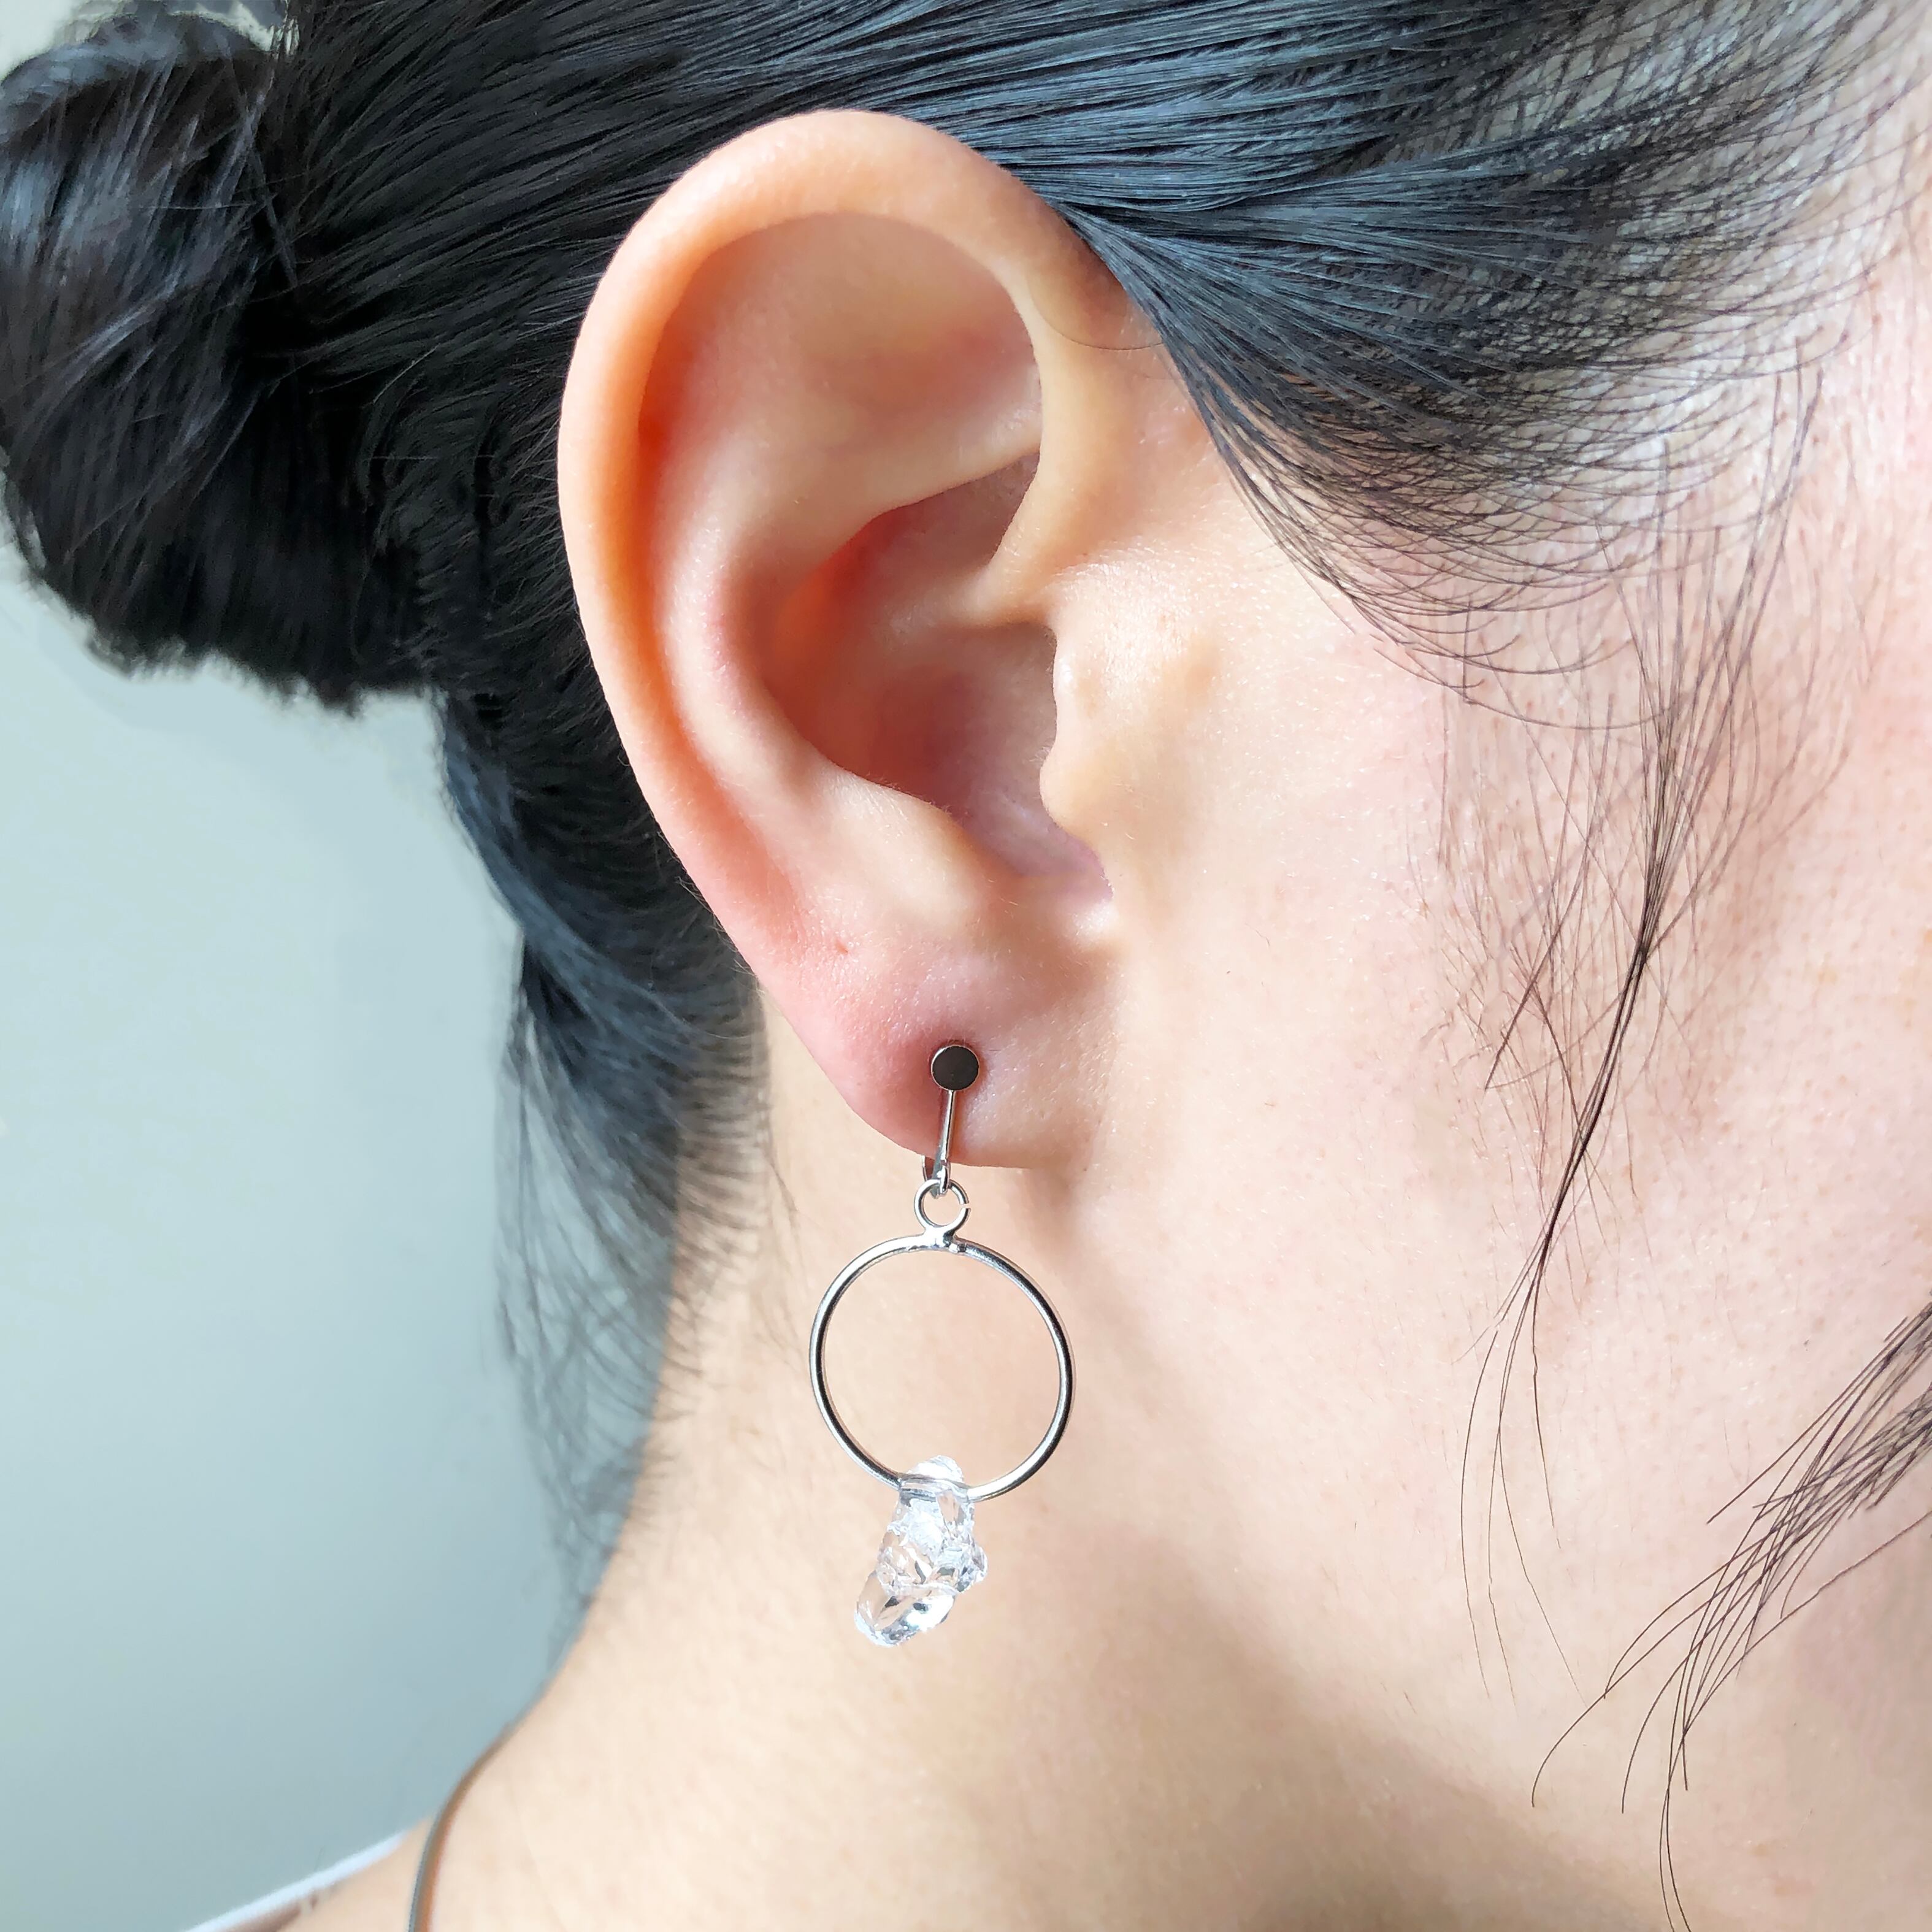 【ONLINE shop限定】FRAGMENT earring 07